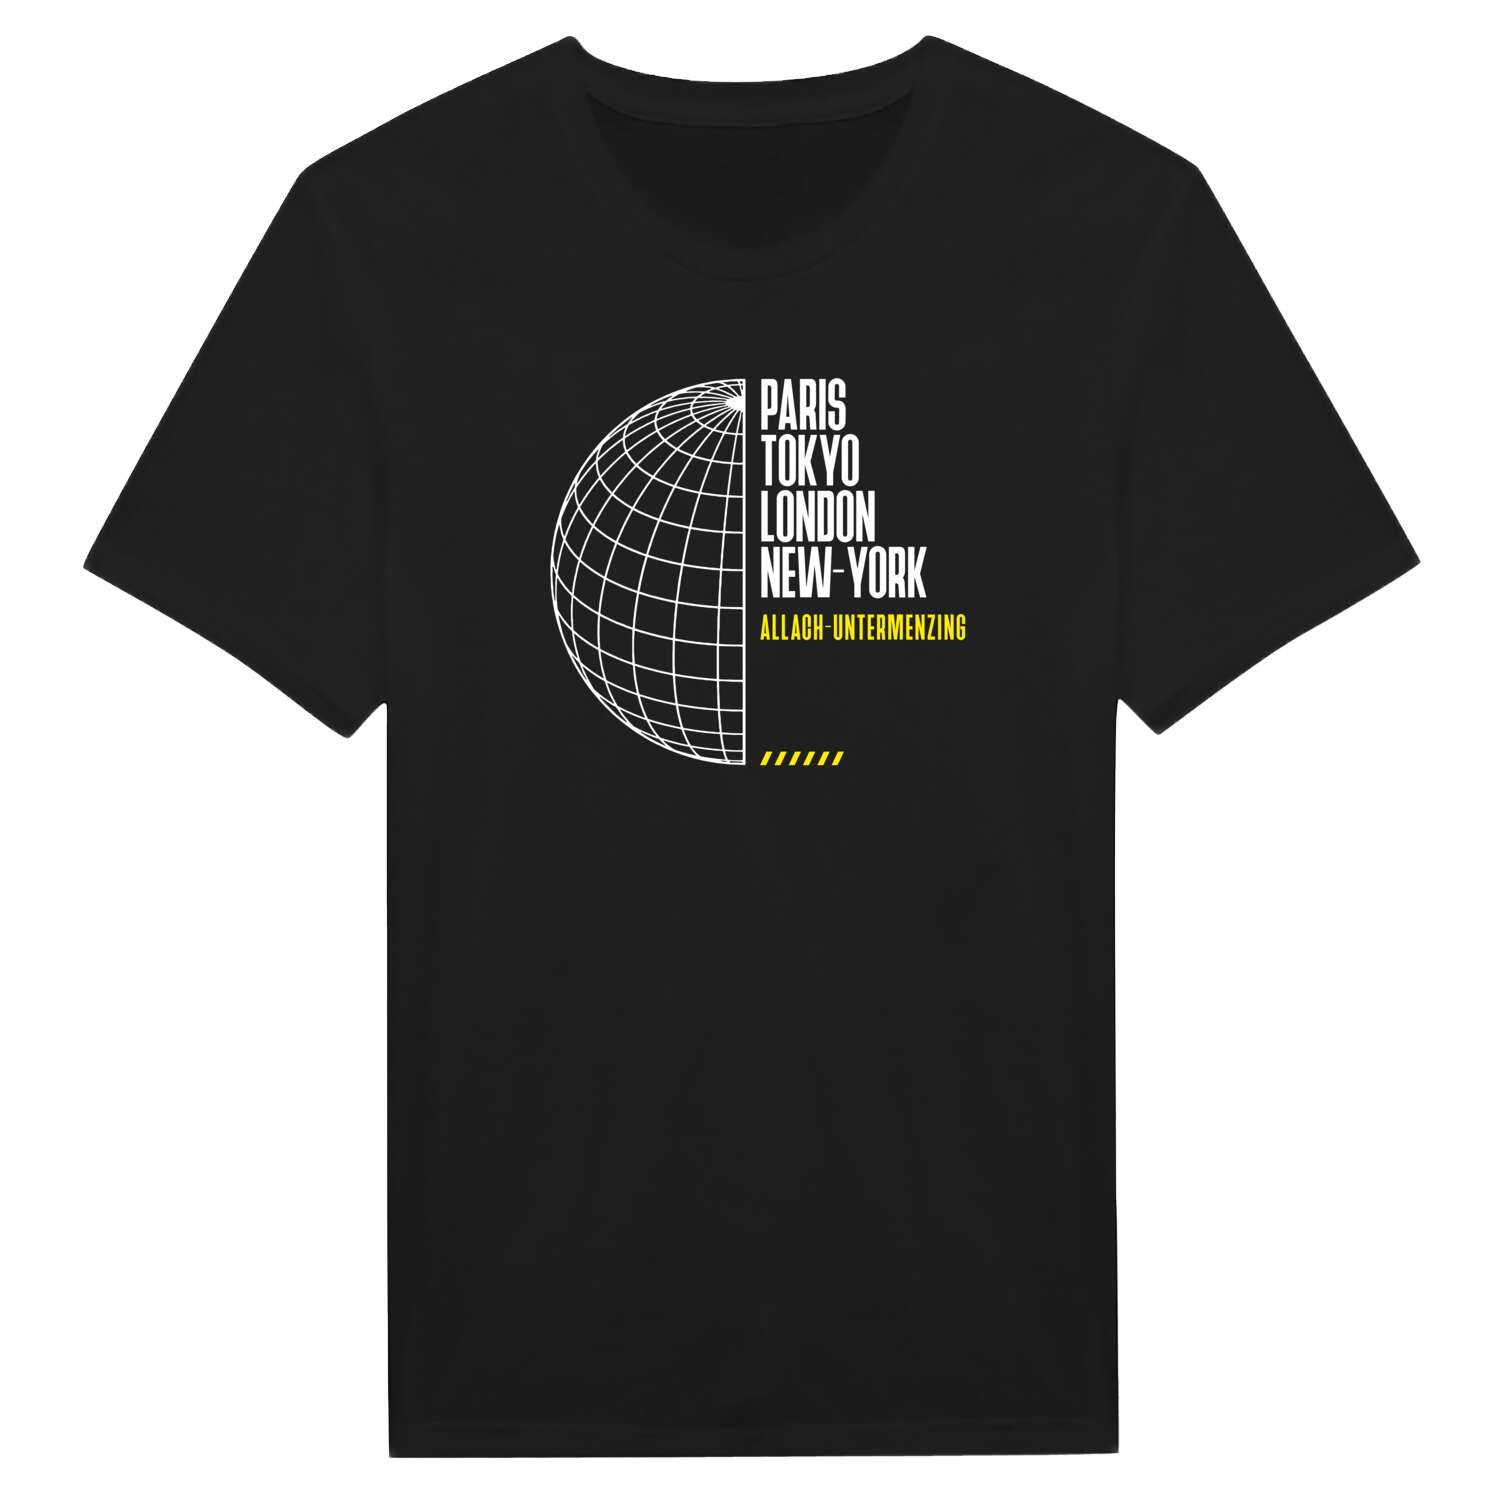 Allach-Untermenzing T-Shirt »Paris Tokyo London«